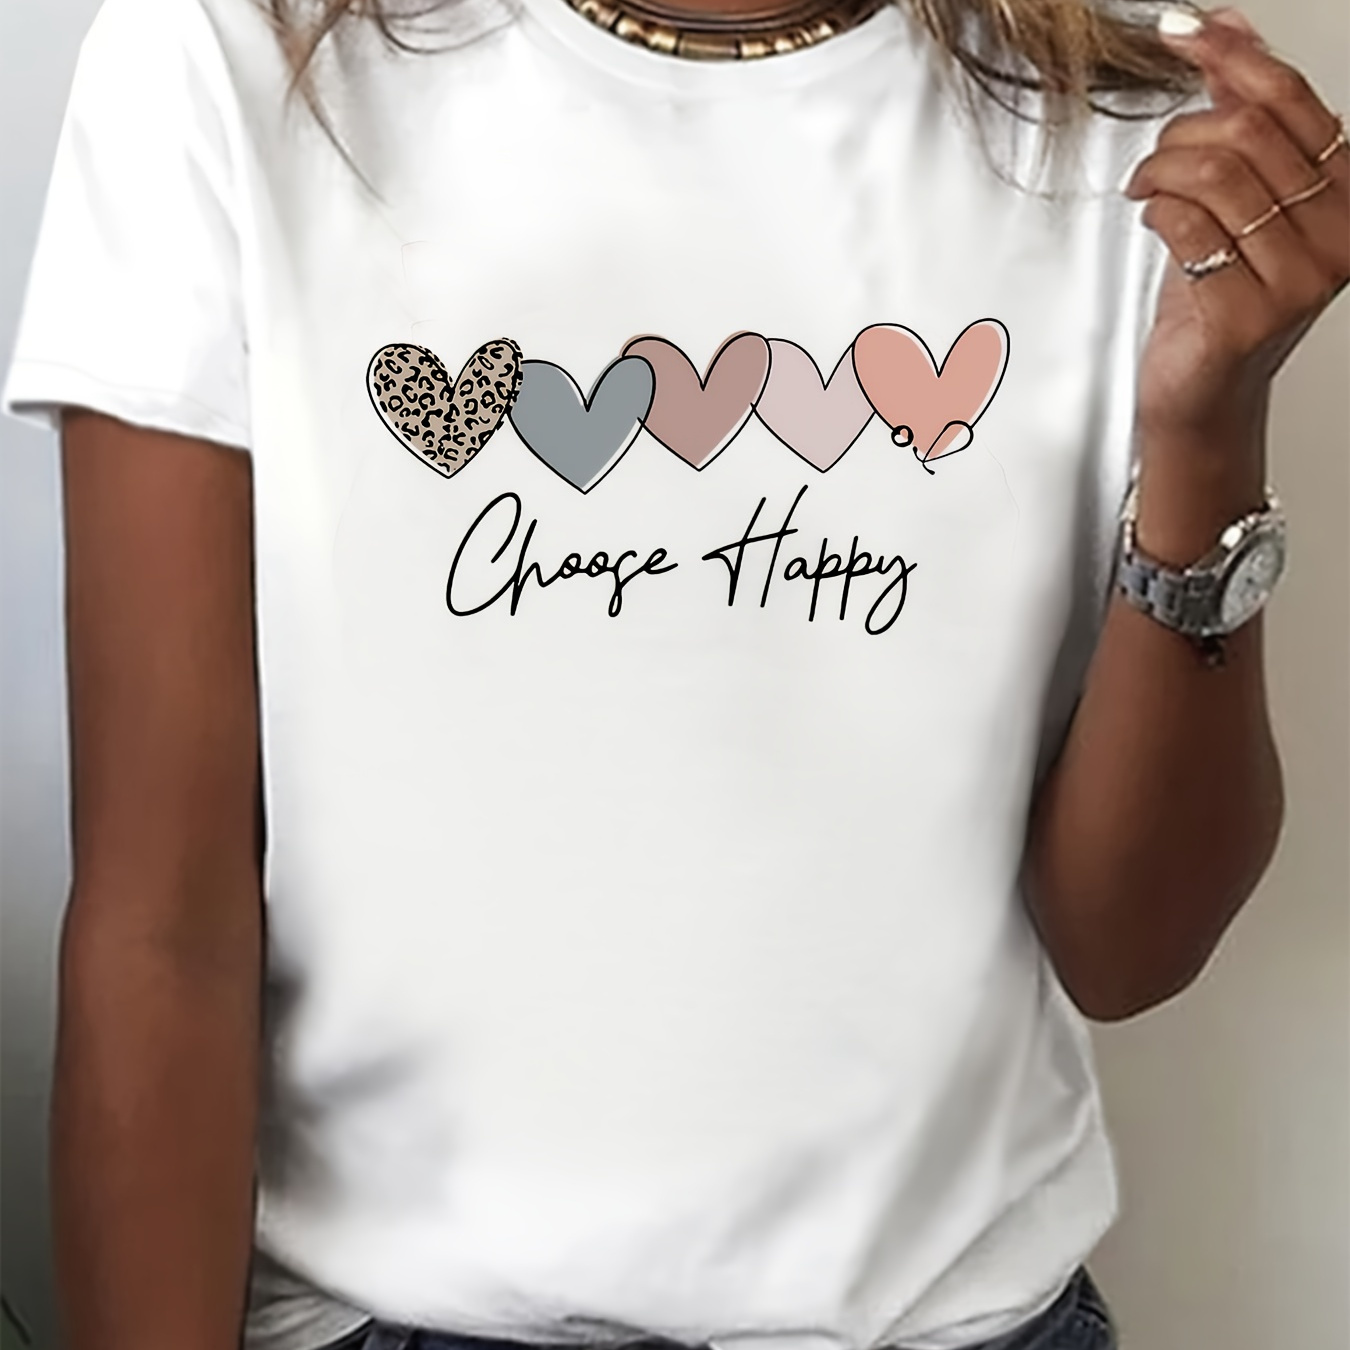 

Heart & Happy Letter Print T-shirt, Cute Short Sleeve Crew Neck Top, Women's Clothing